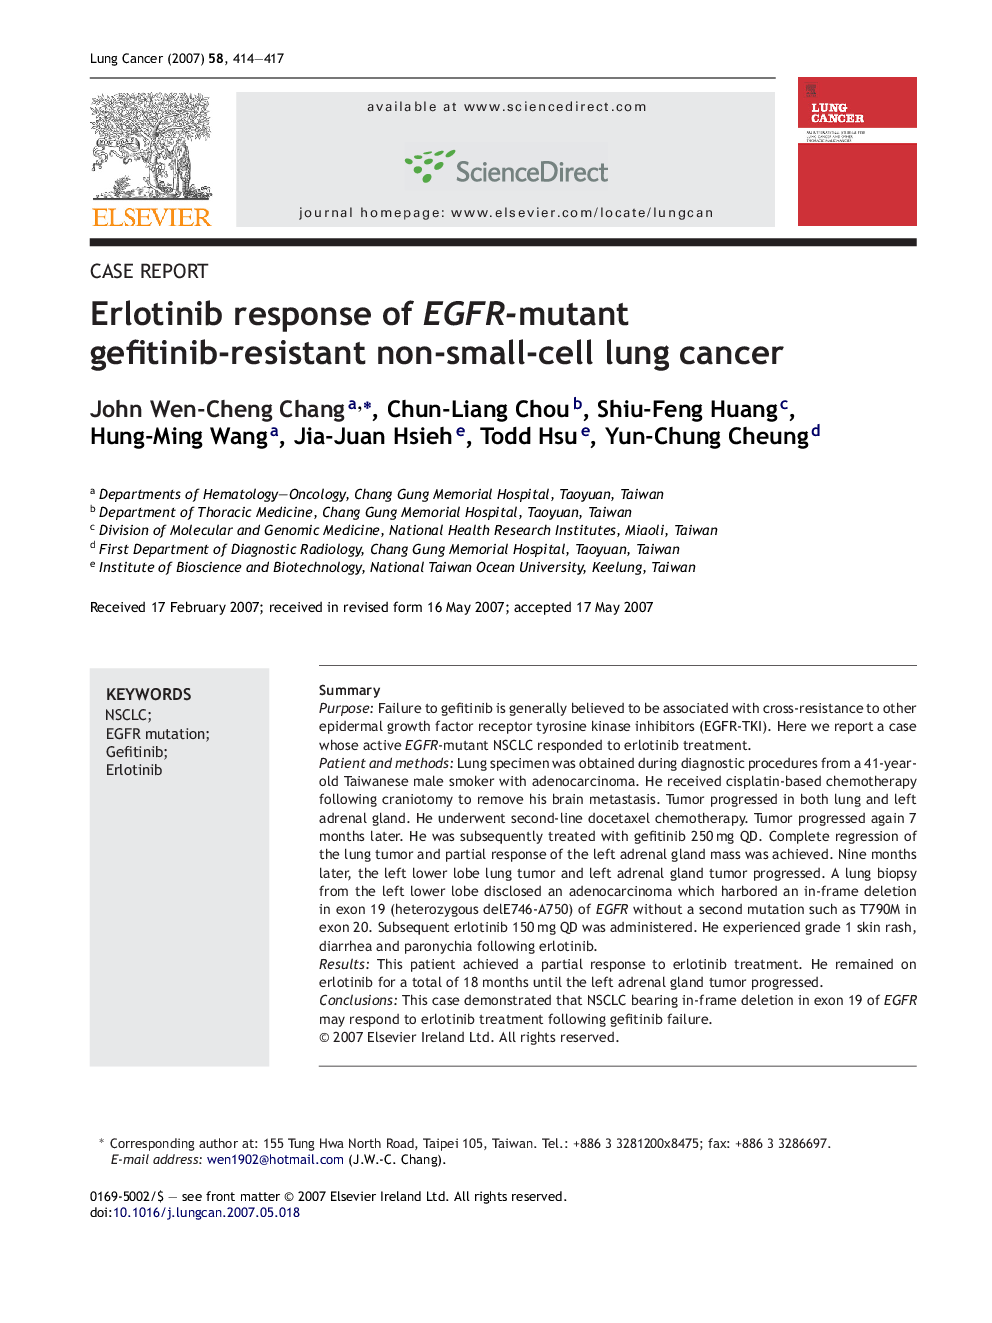 Erlotinib response of EGFR-mutant gefitinib-resistant non-small-cell lung cancer